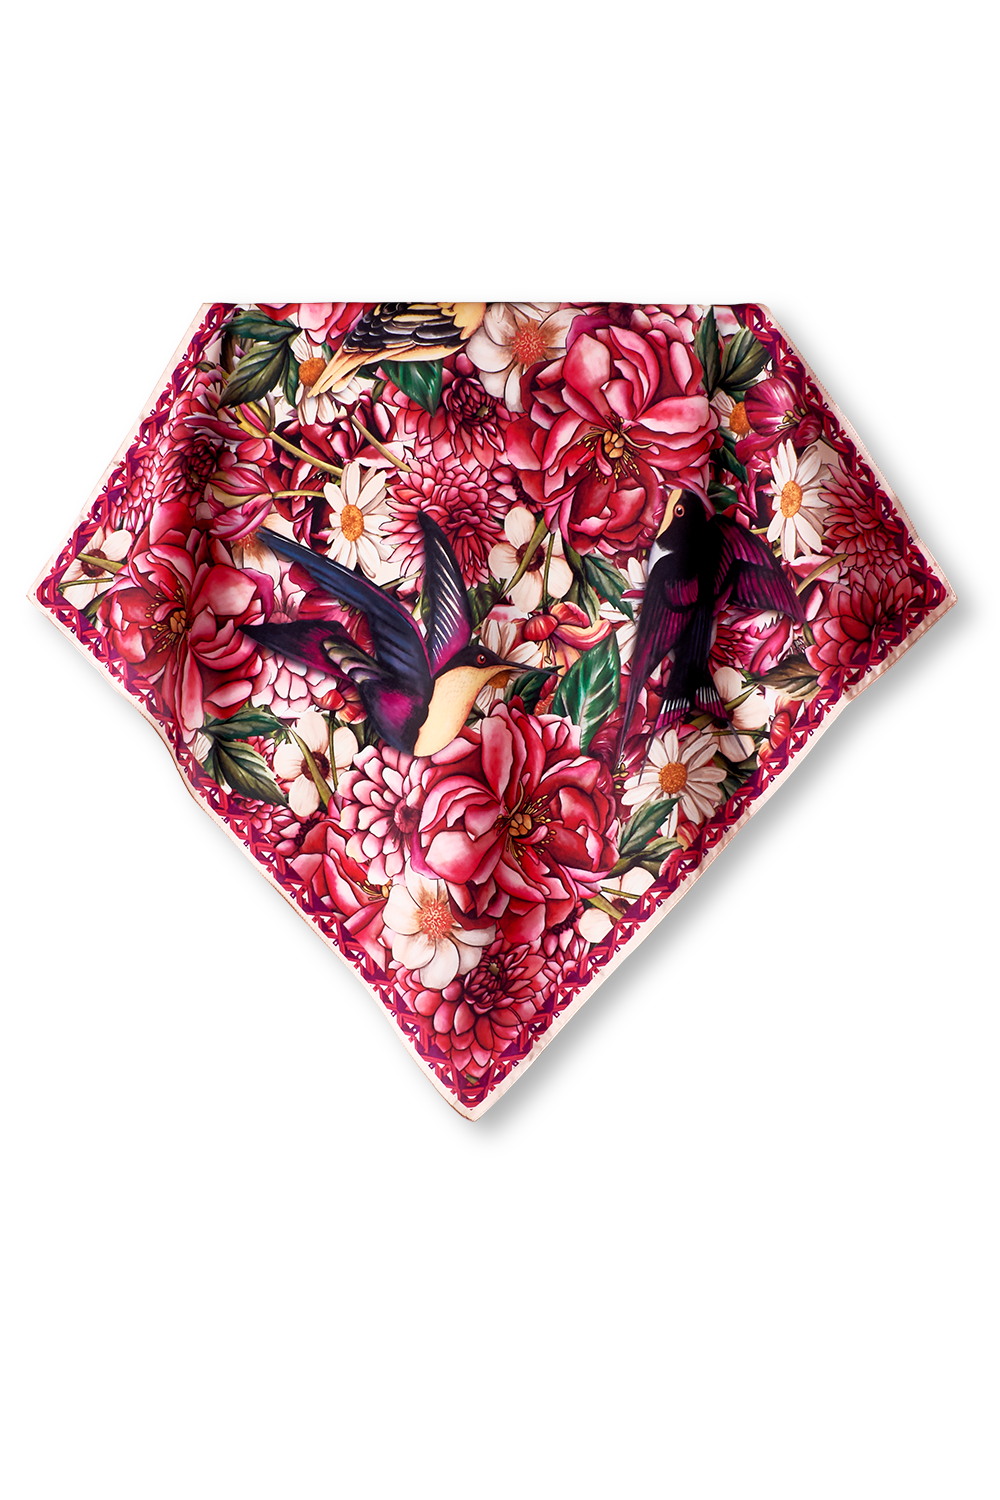 Lenço Beija-flor em cetim poliéster | 50x50cm